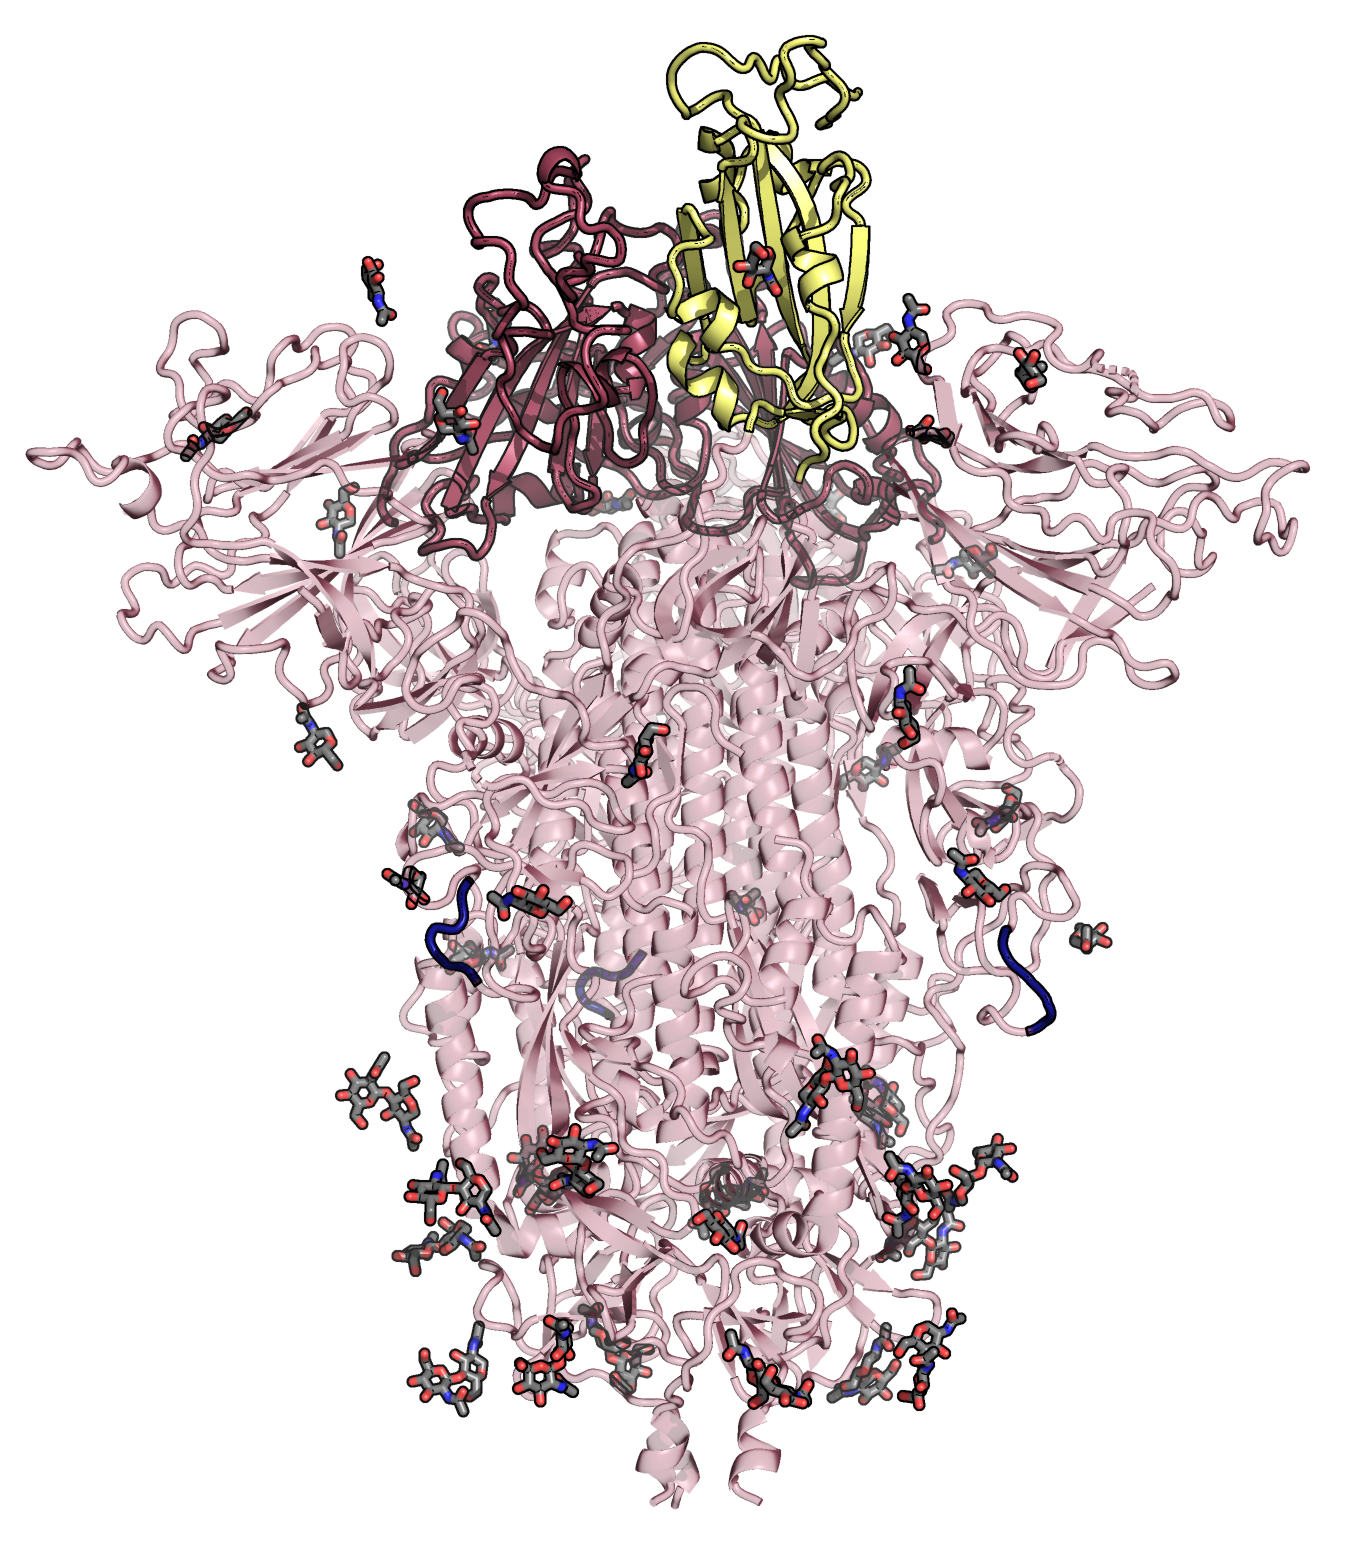 Spike Protein - SARS-CoV-2